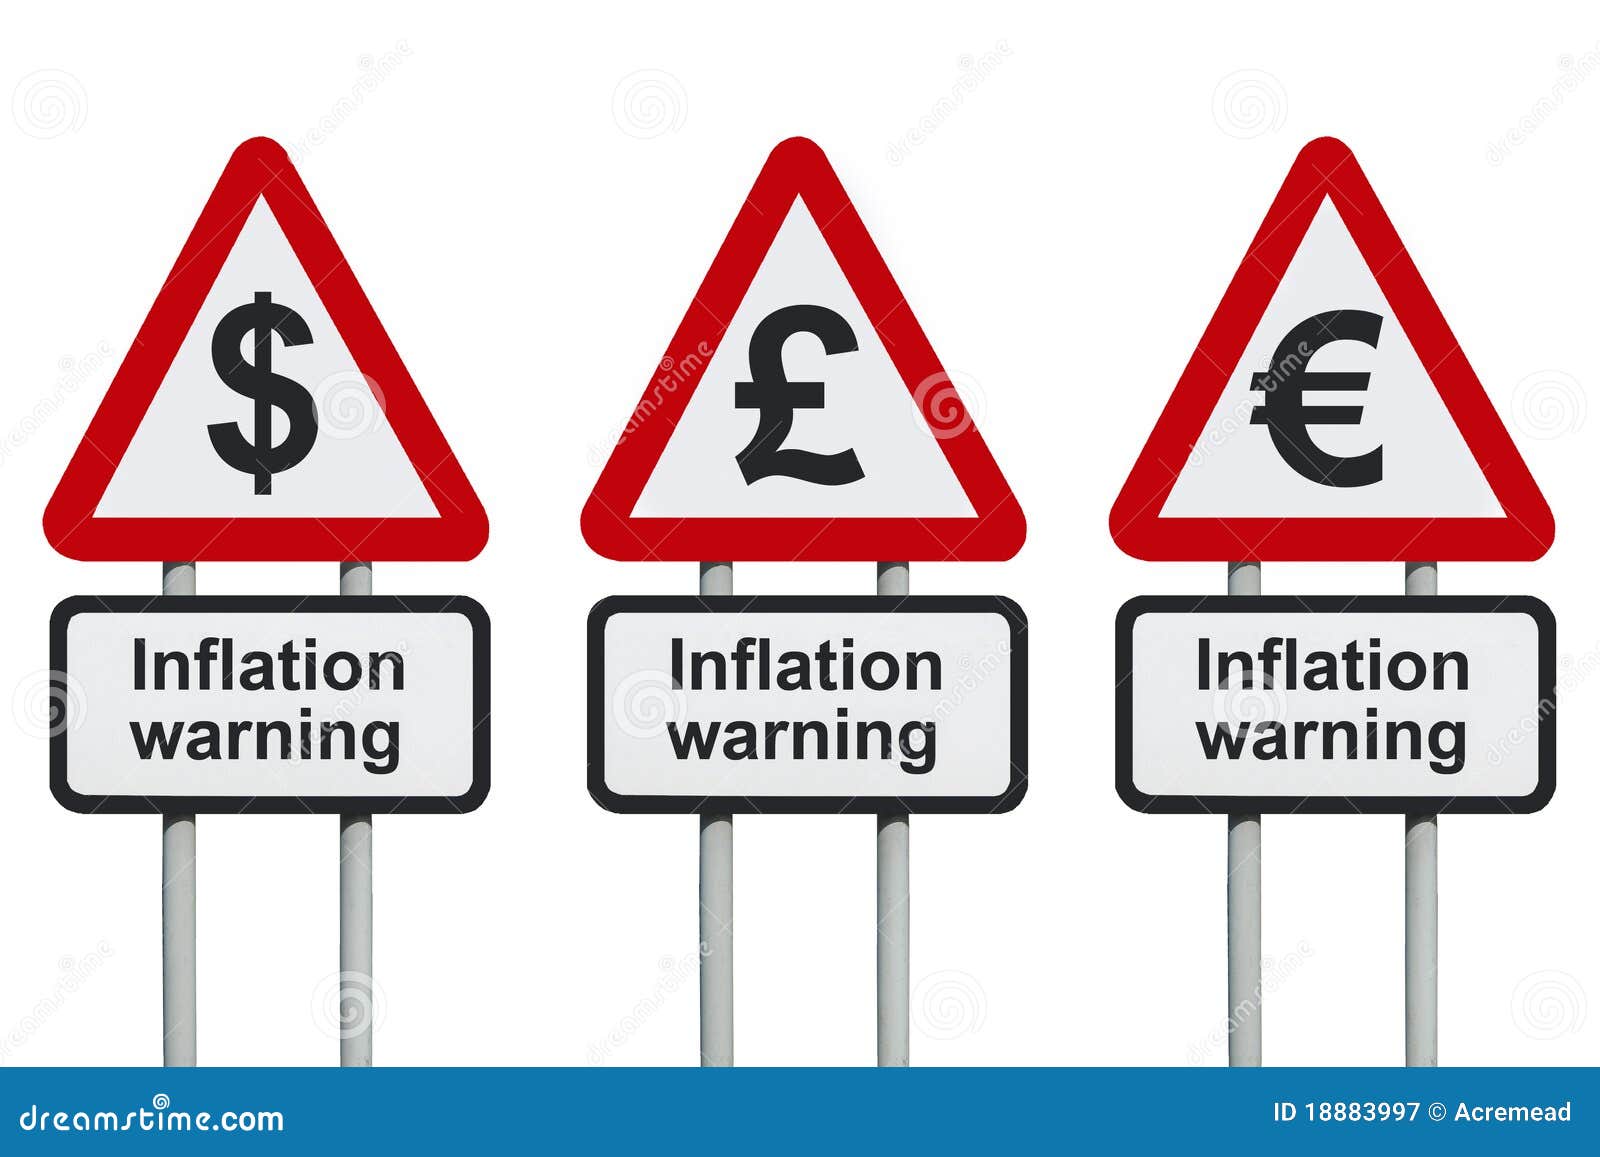 inflation warning road sign